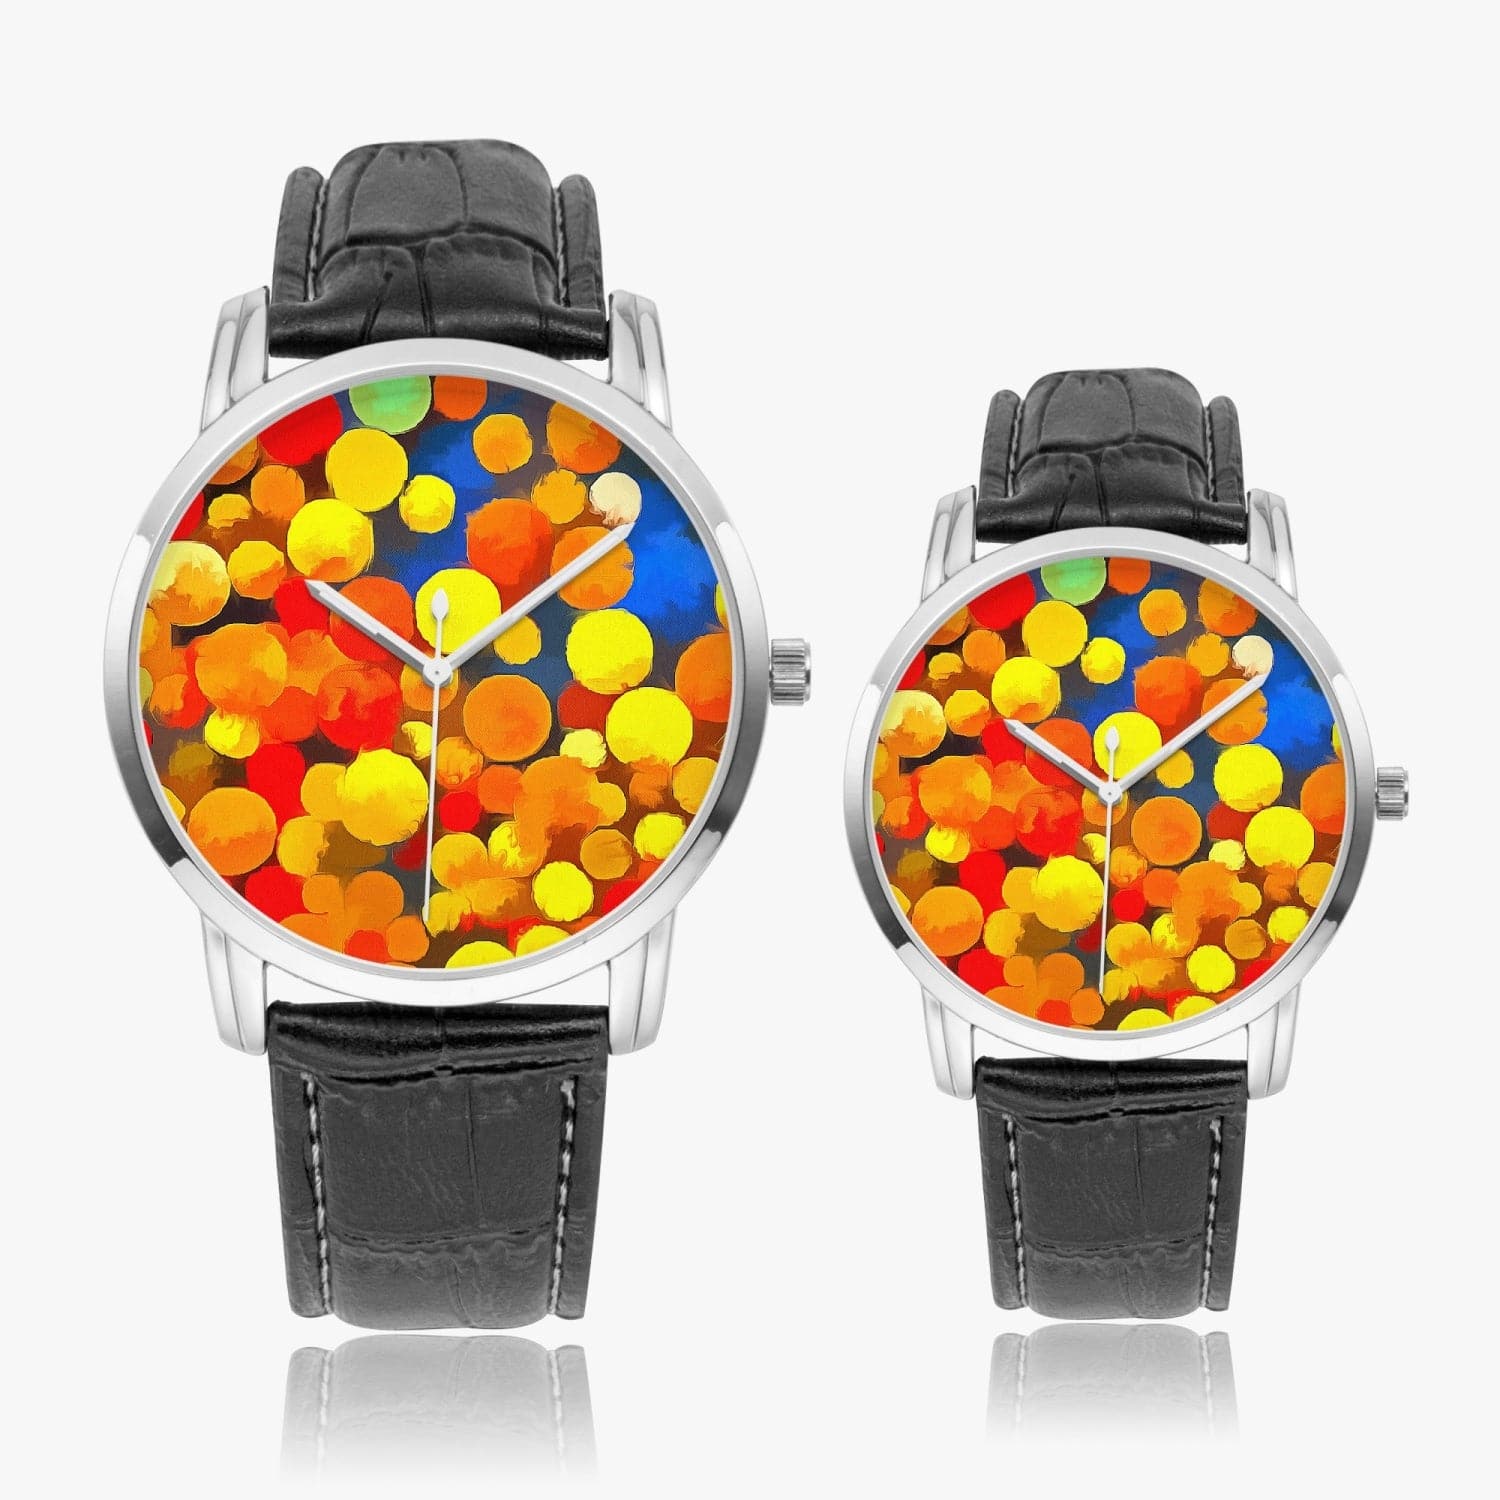 'Spots' Instafamous Wide Type Quartz watch by Sensus Studio